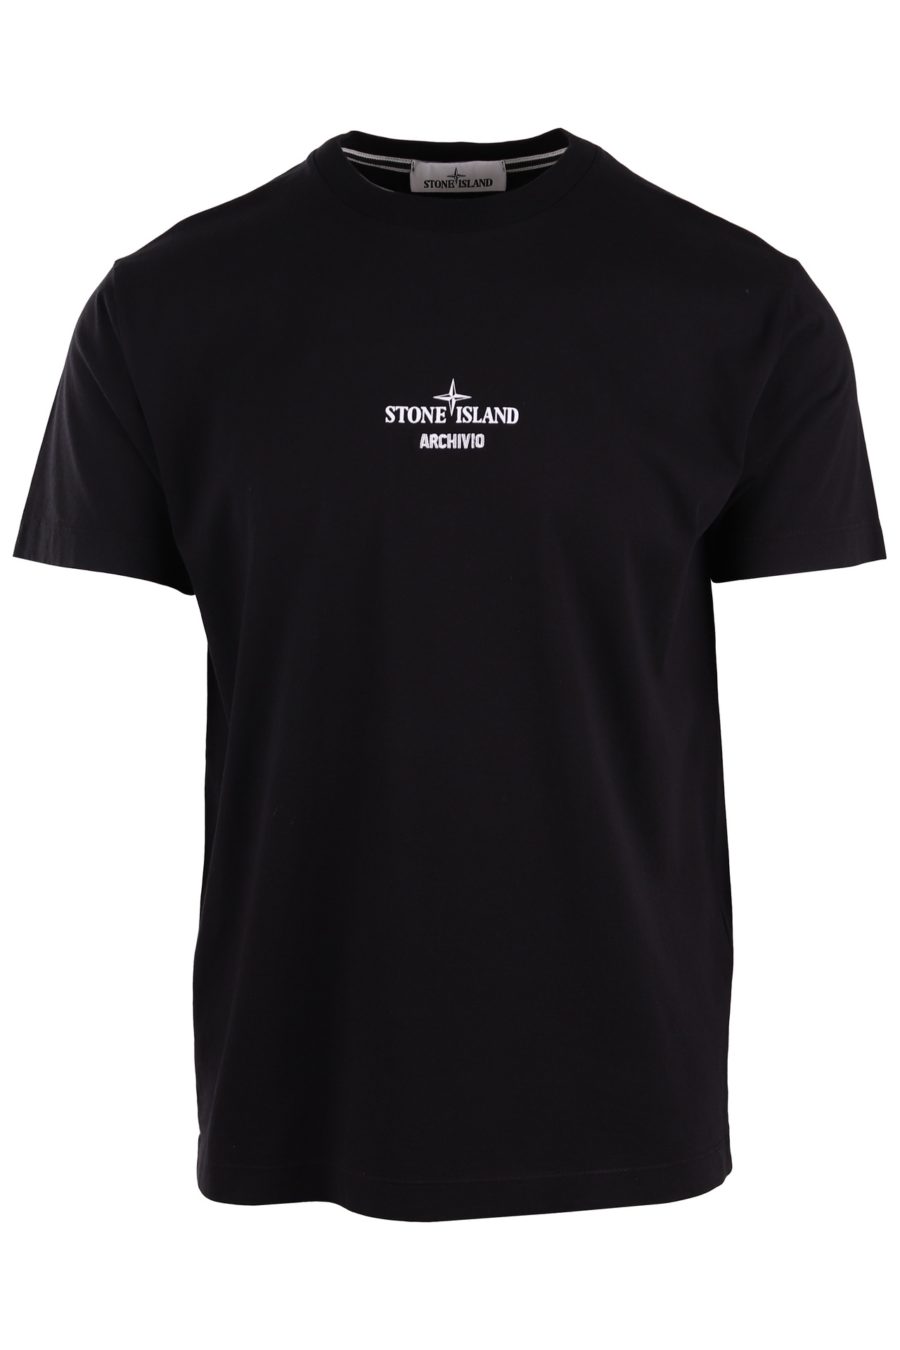 T-shirt Stone Island noir avec logo "archivio" - 1973d037007b1329f76e48264457effc91aeb215